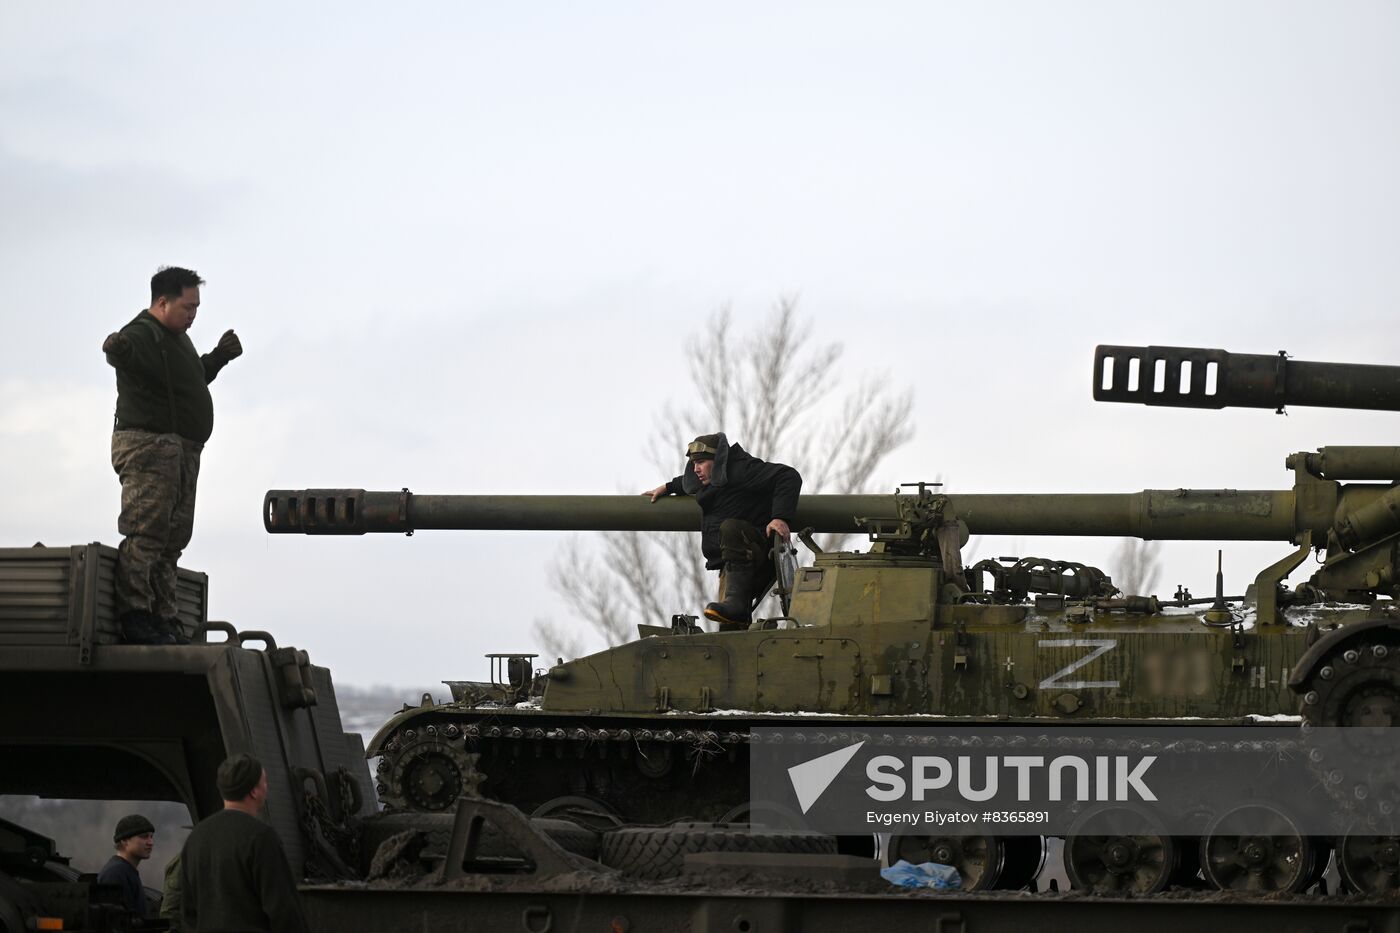 Russia Ukraine Military Operation Equipment Transporting